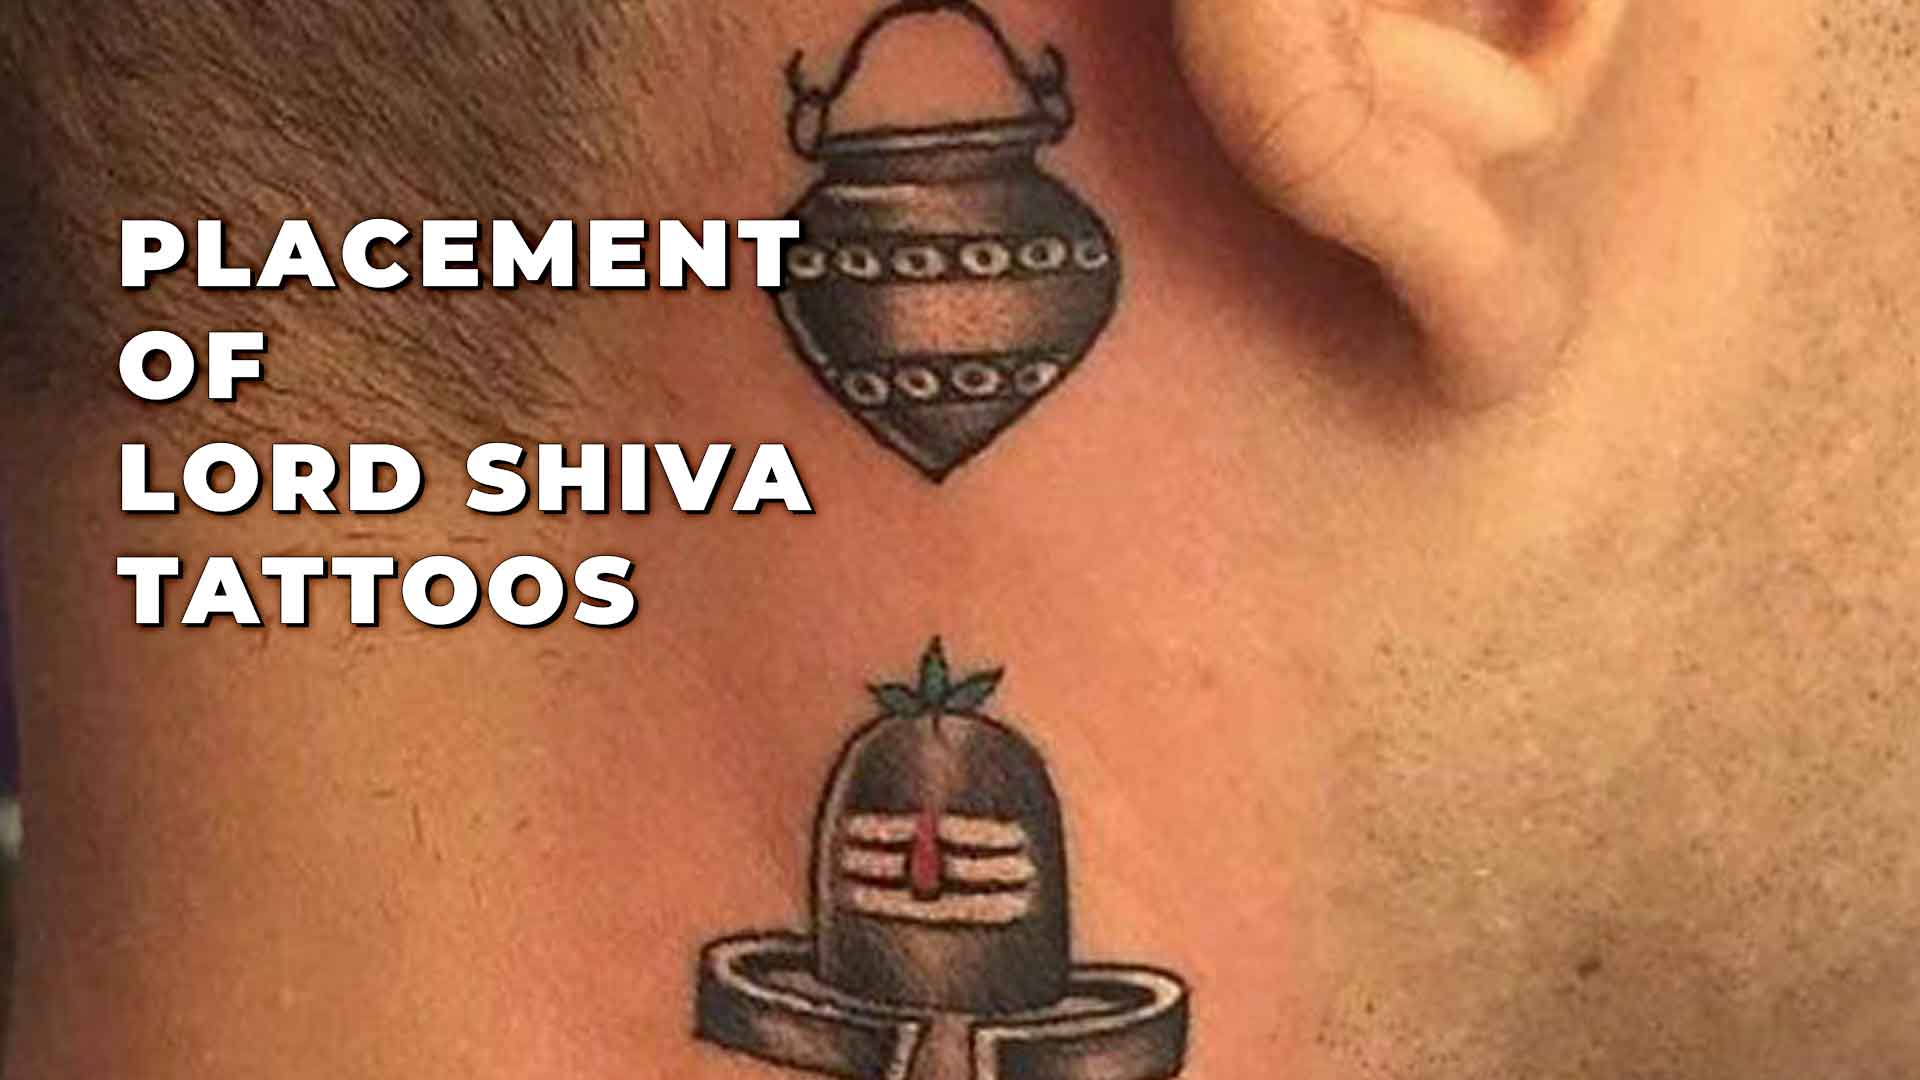 Shiva tattoo Black and White Stock Photos & Images - Alamy